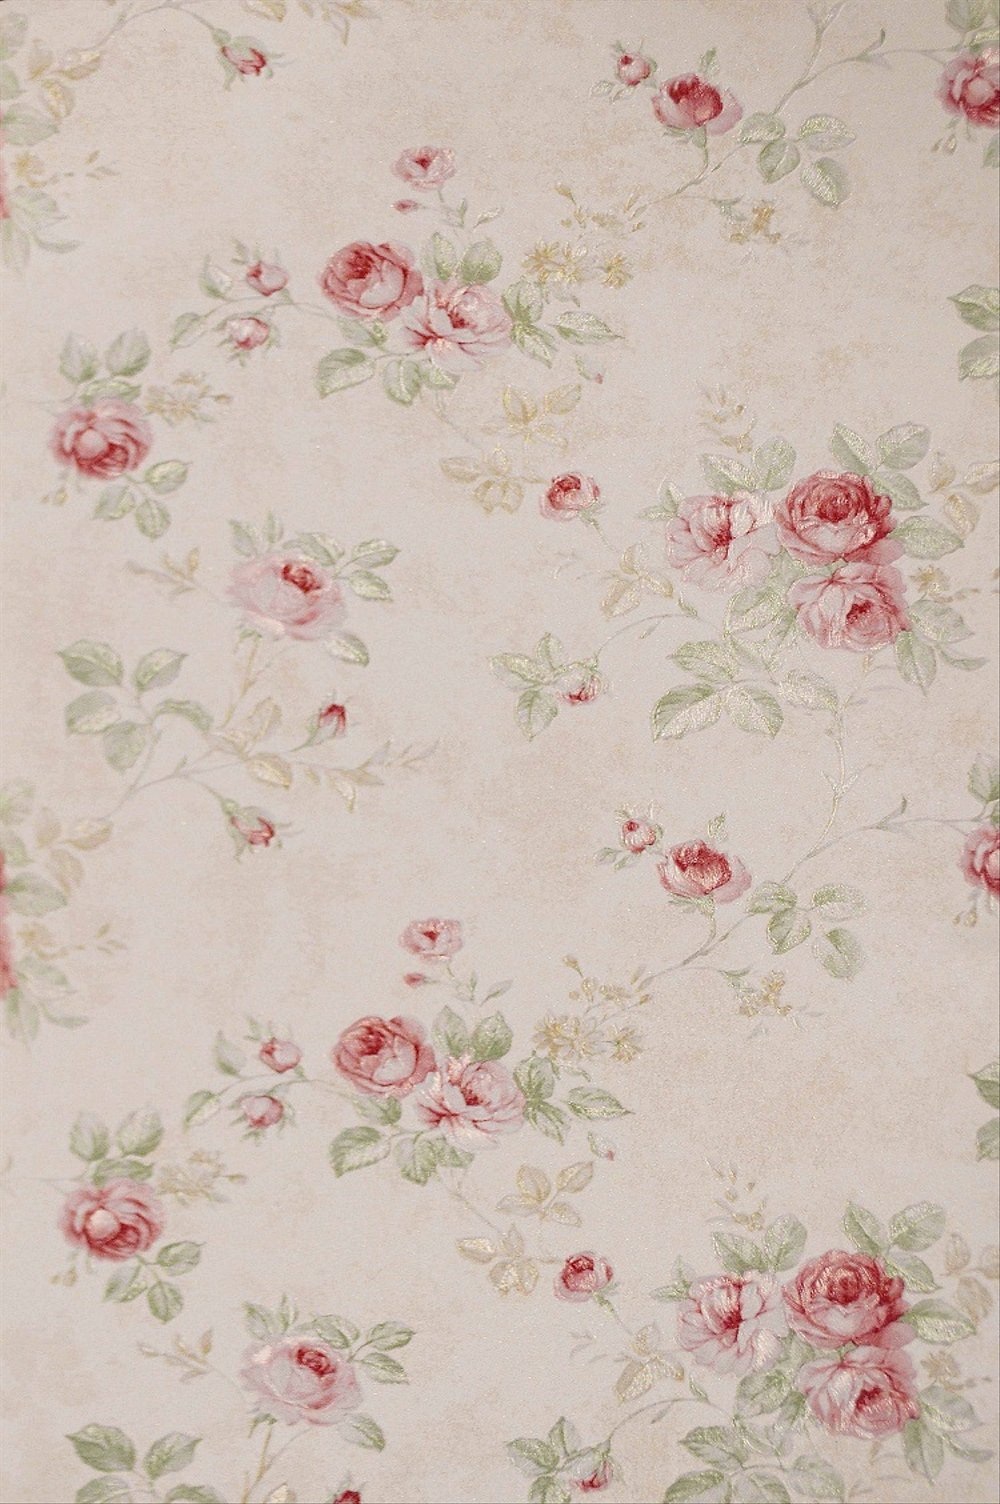 wallpaper dinding murah,rosa,sfondo,modello,tessile,disegno floreale